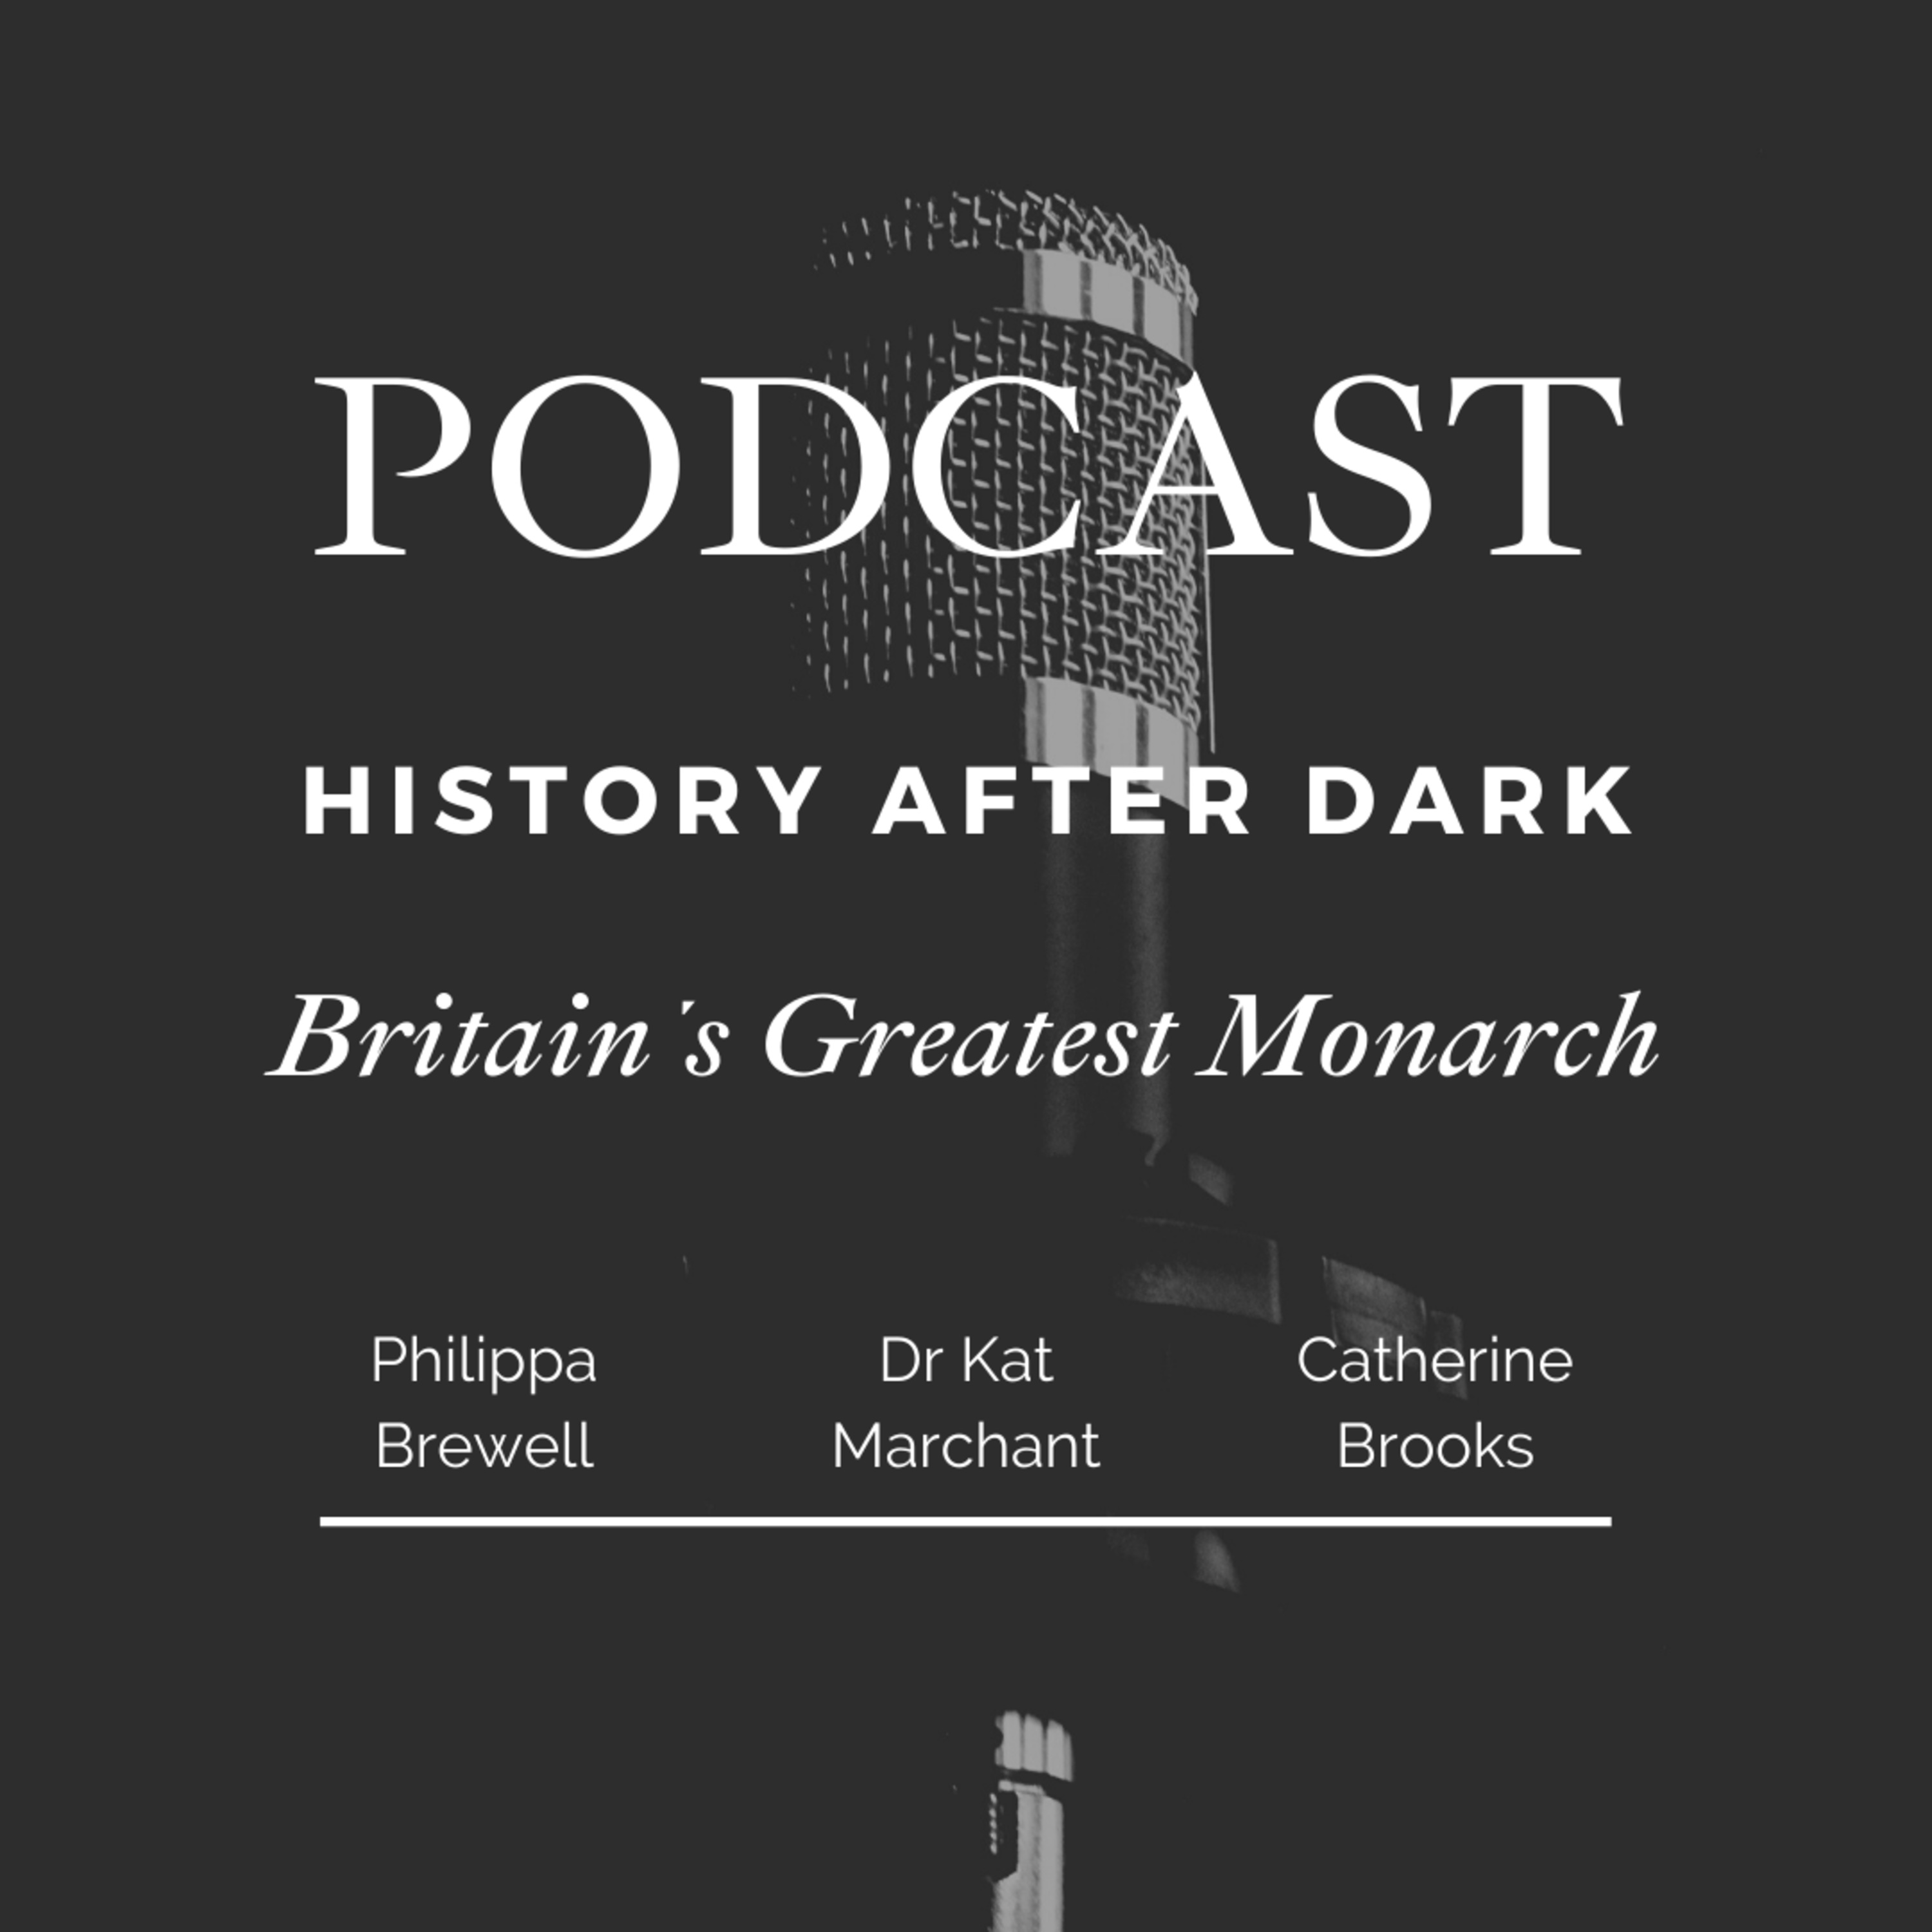 Who was Britain's Greatest Monarch?